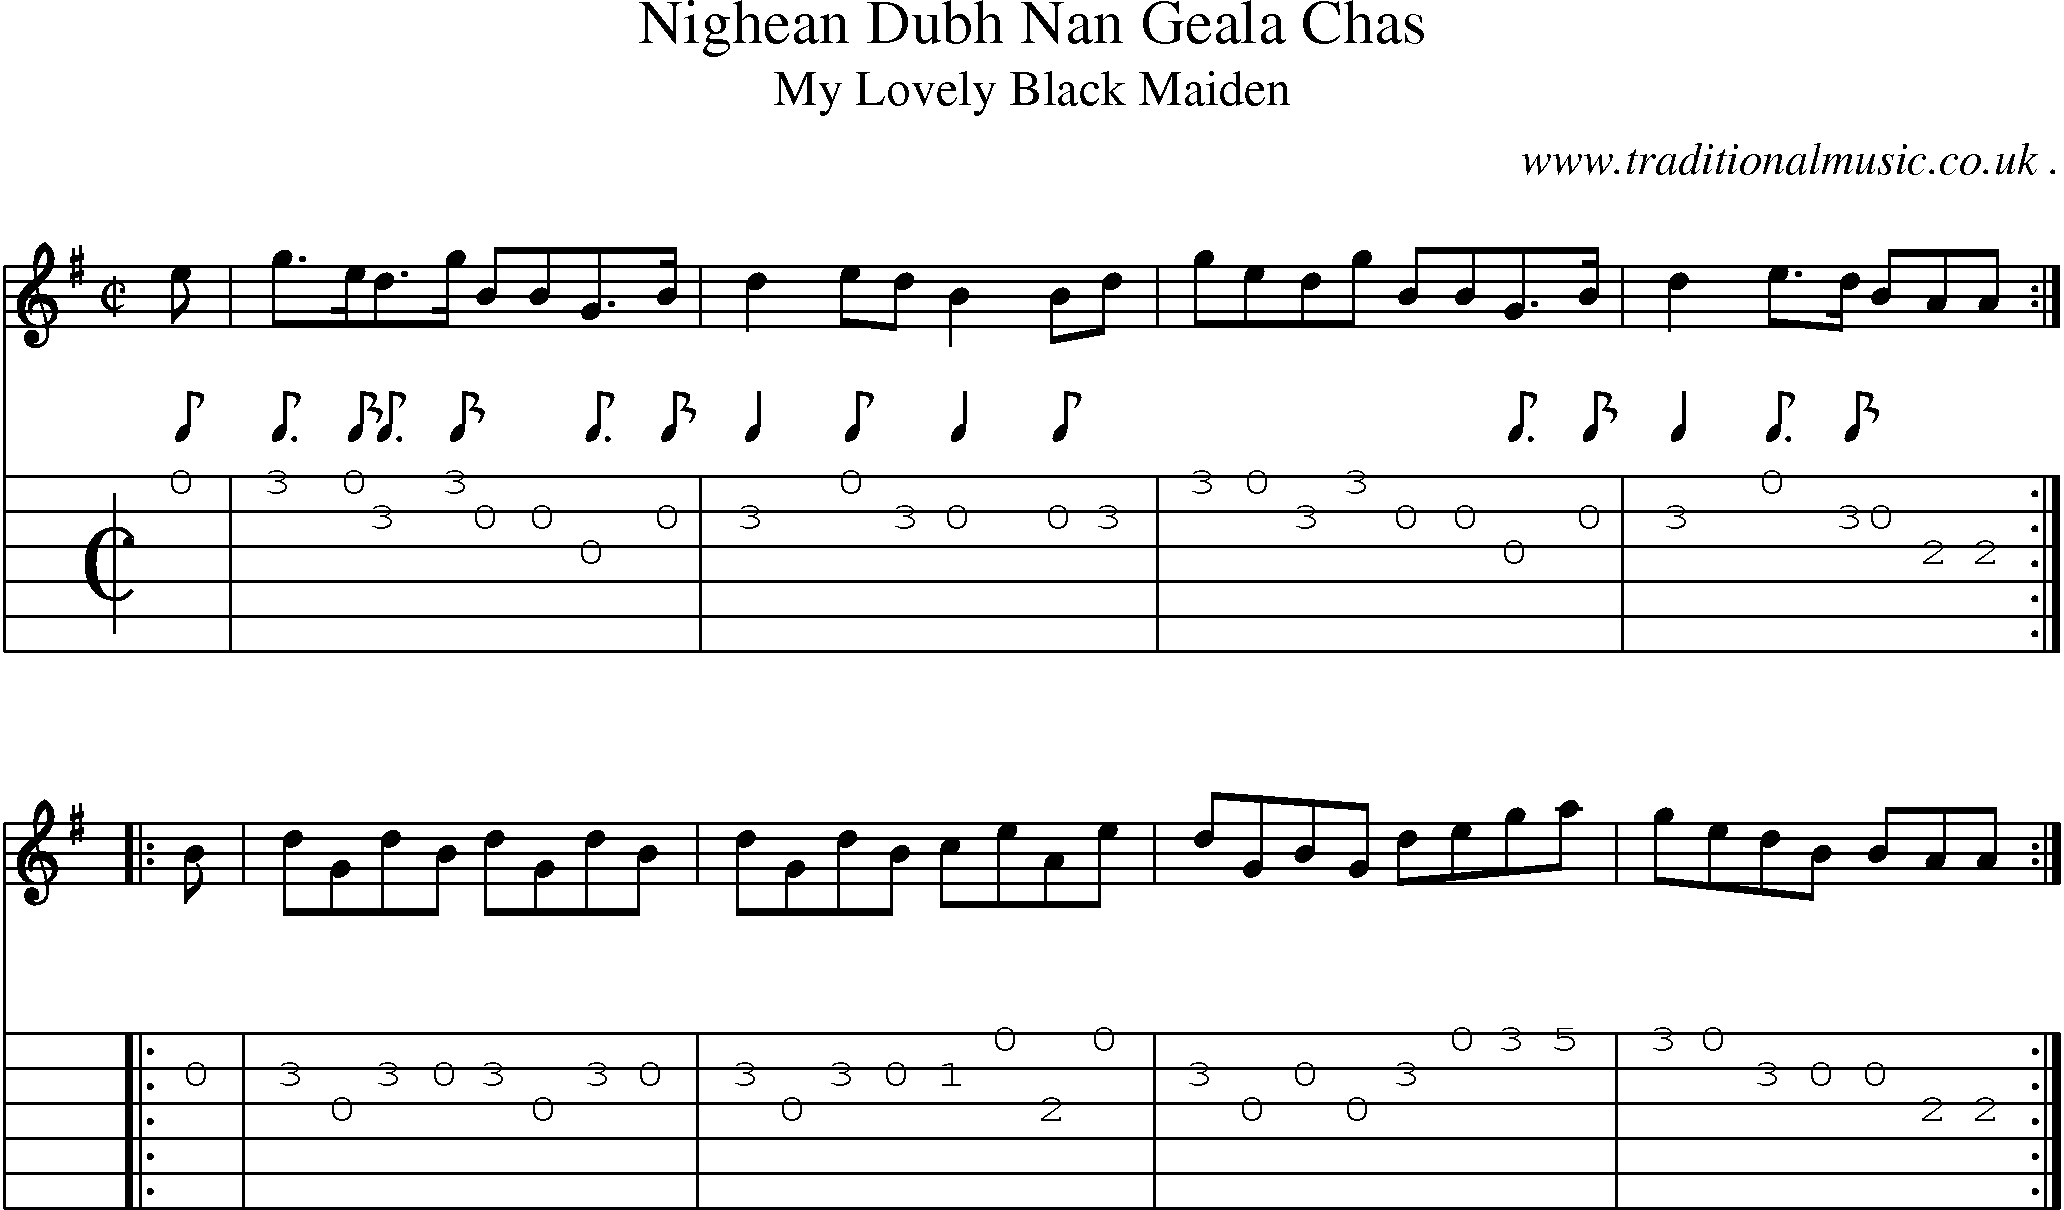 Sheet-music  score, Chords and Guitar Tabs for Nighean Dubh Nan Geala Chas